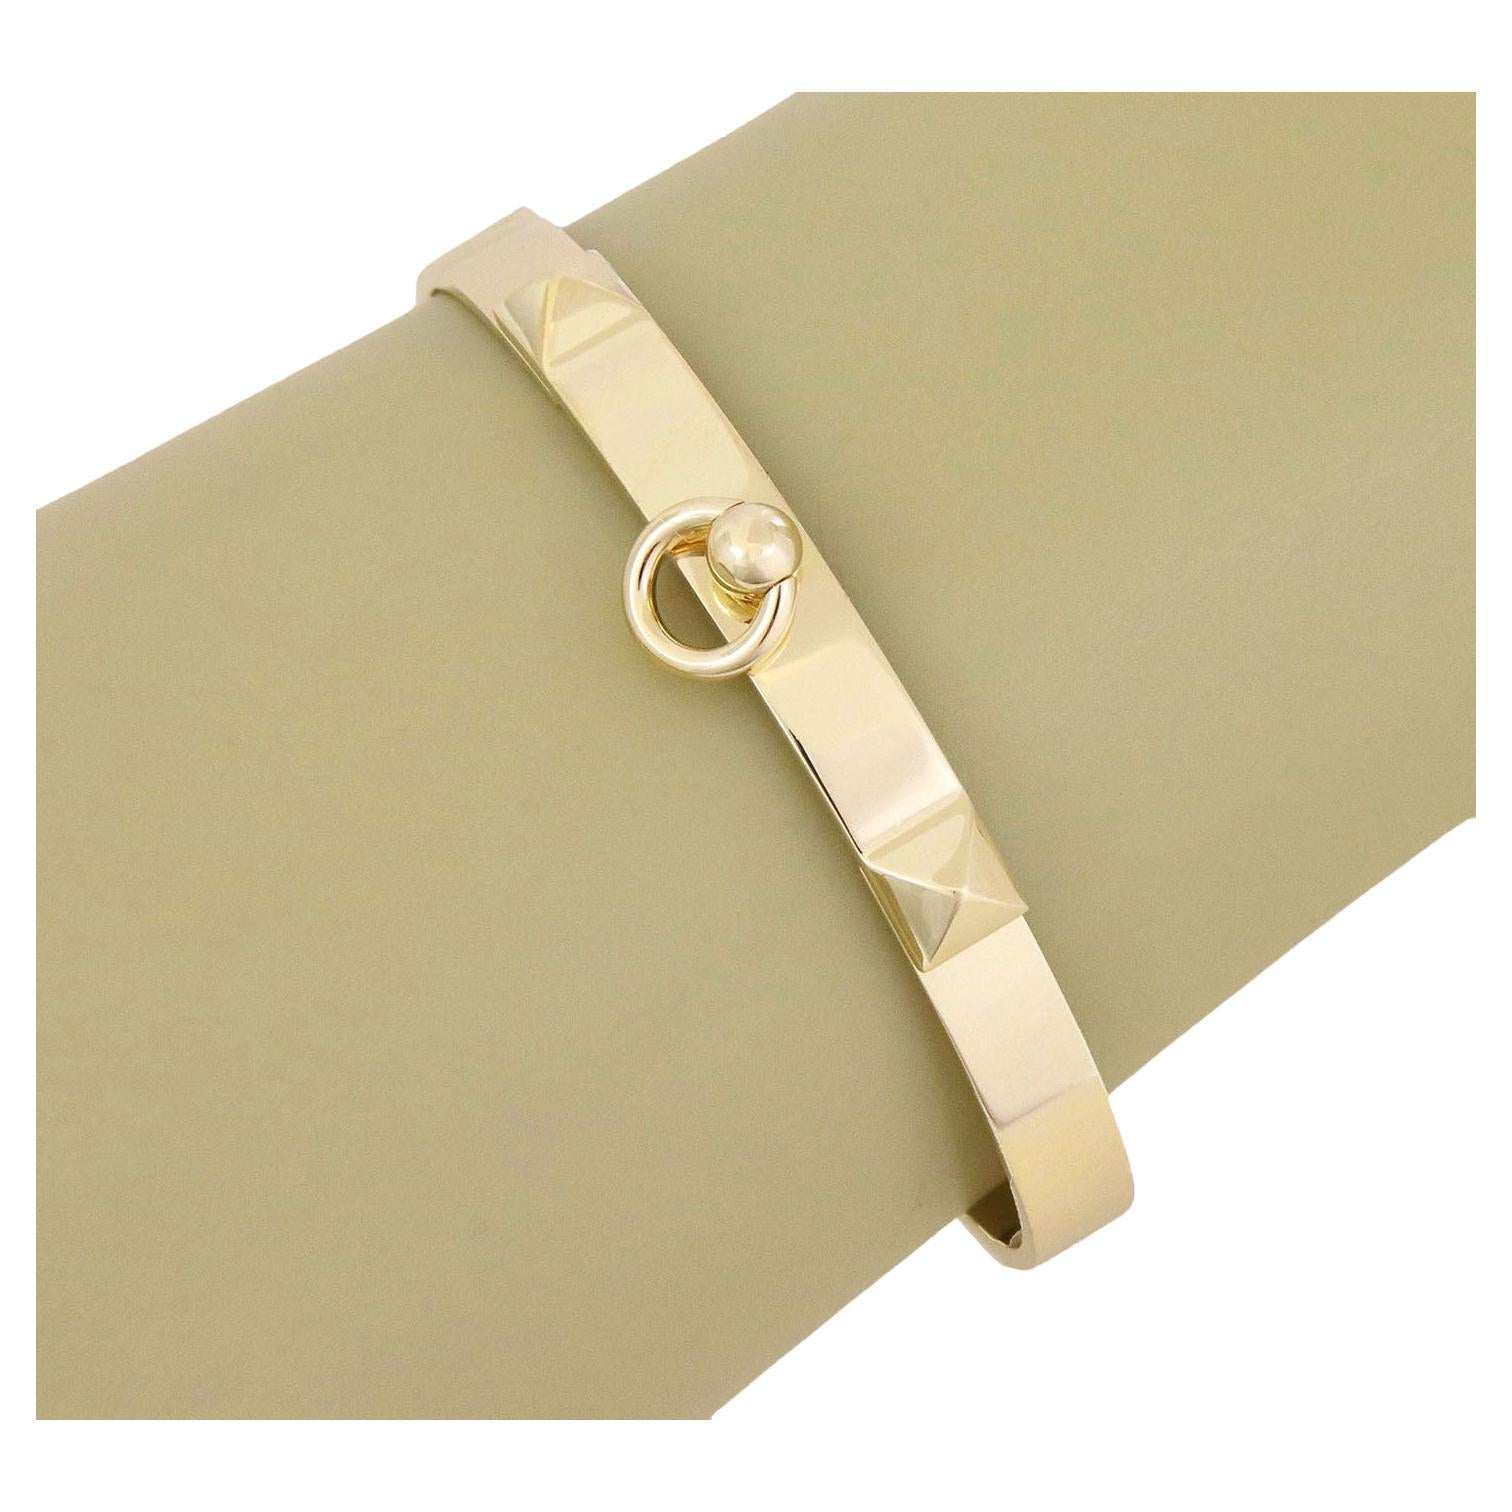 Hermes Collier de Chien 18k Gelbgold Armspange Armband